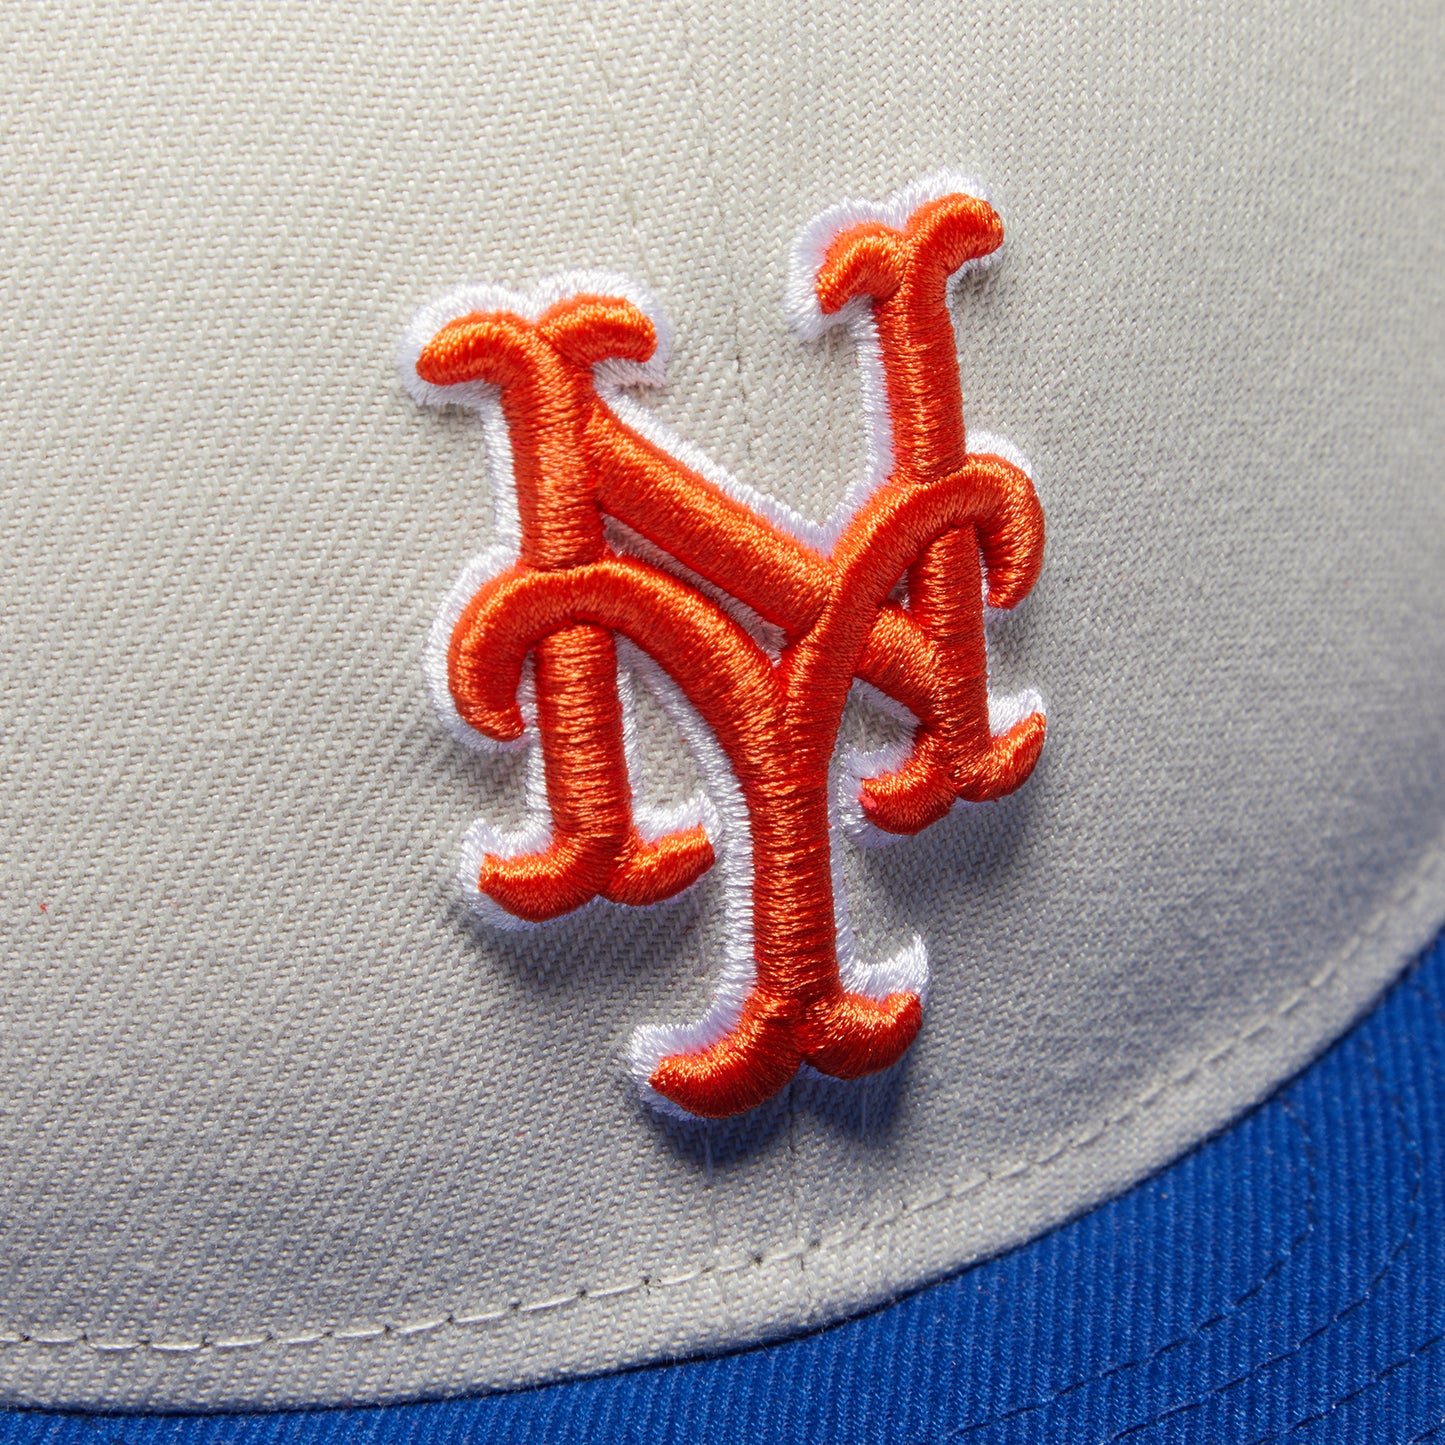 New Era New York Mets (White/Blue)